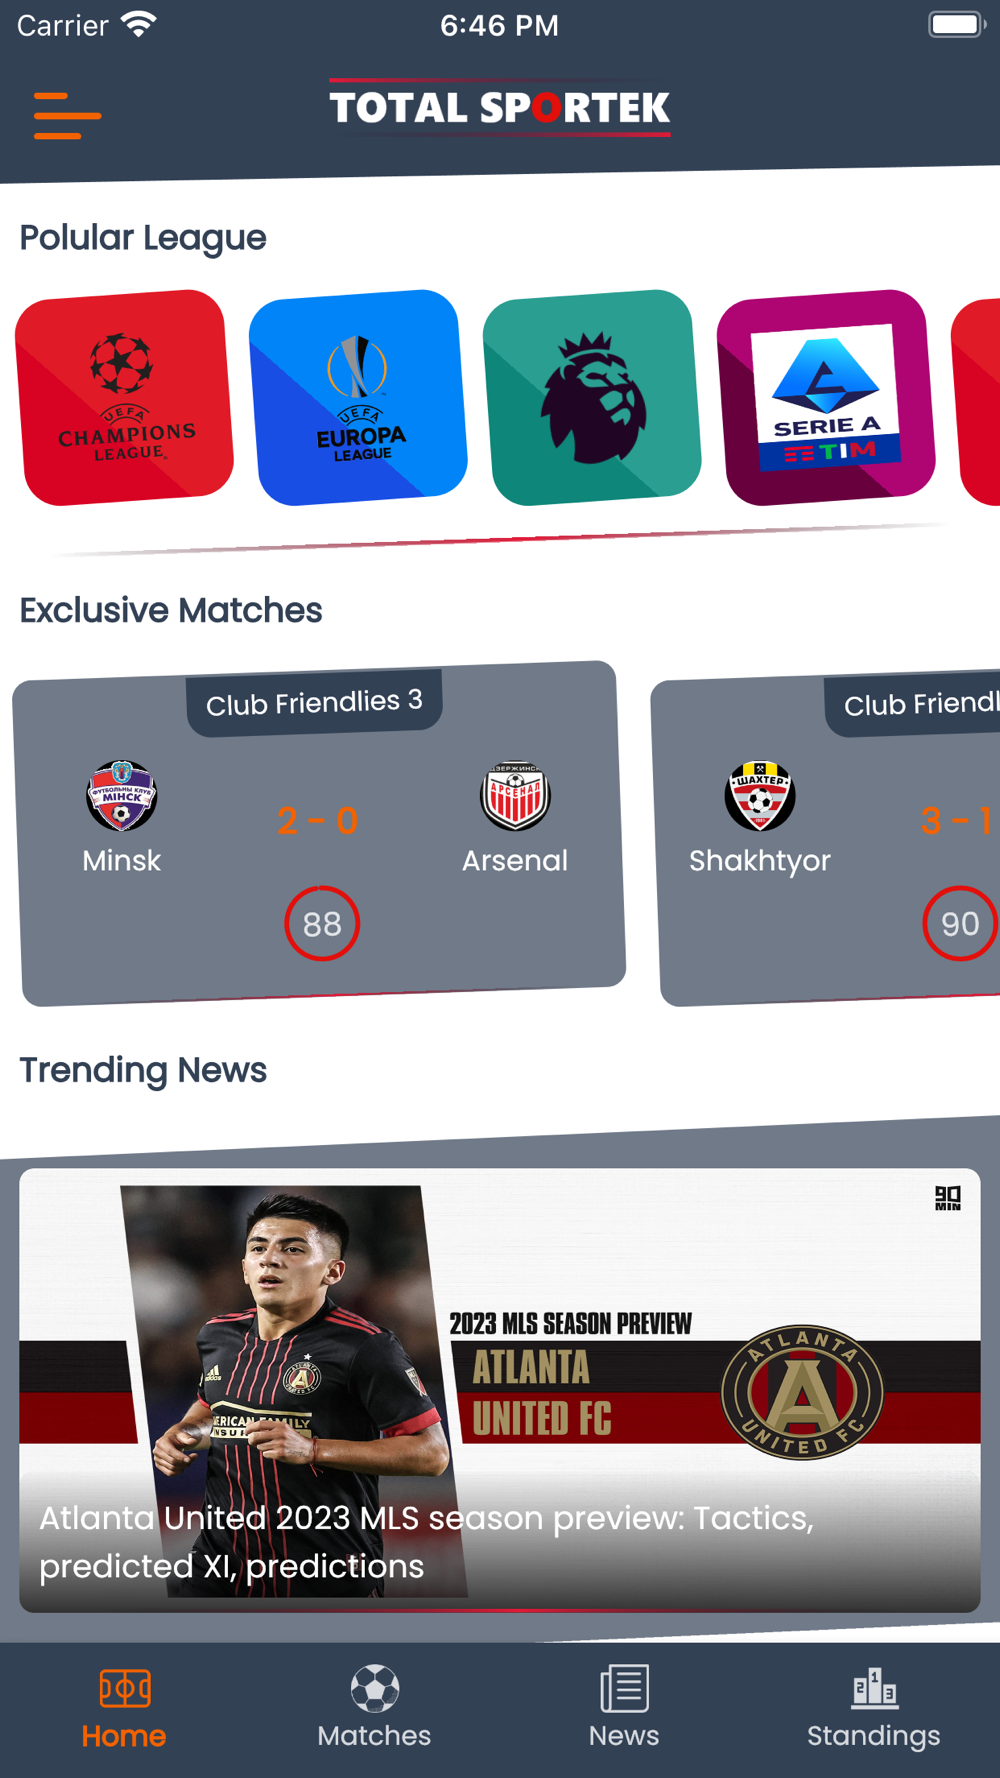 Live Football - Totalsportek Free Download App for iPhone